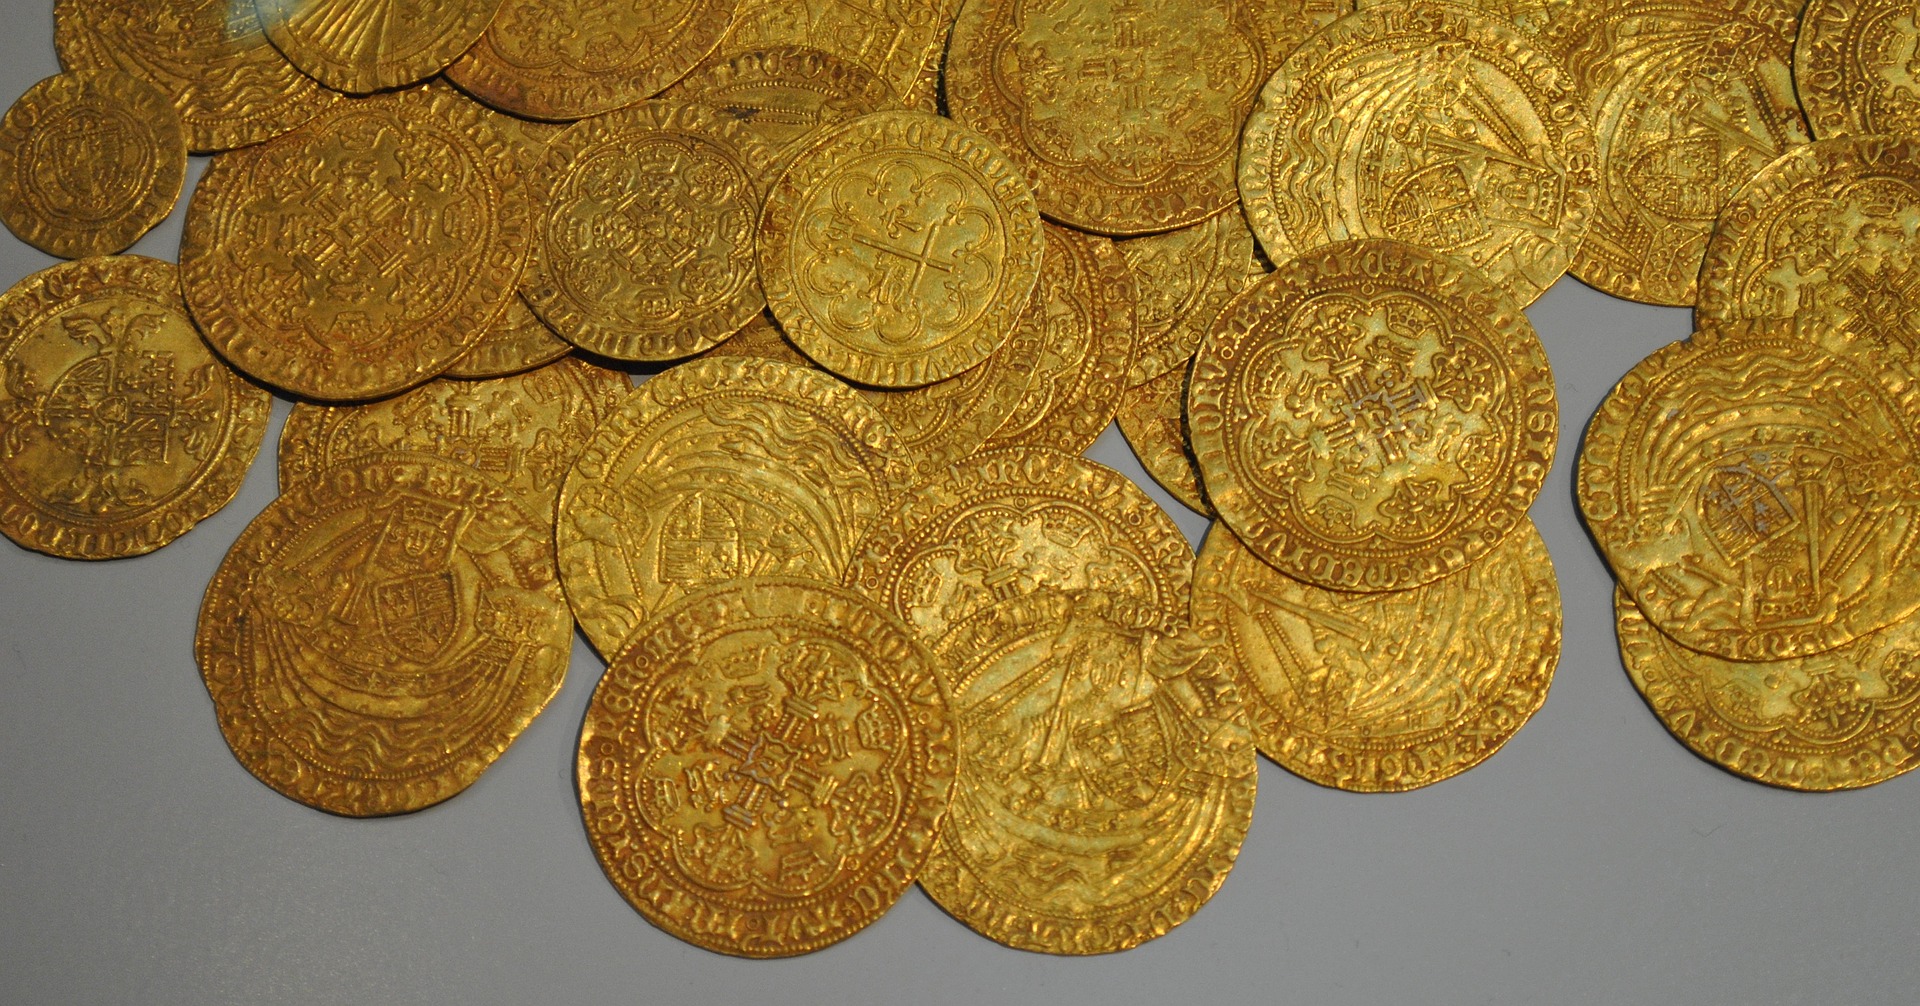 © https://pixabay.com/en/gold-coin-museum-treasure-thaler-1633073/